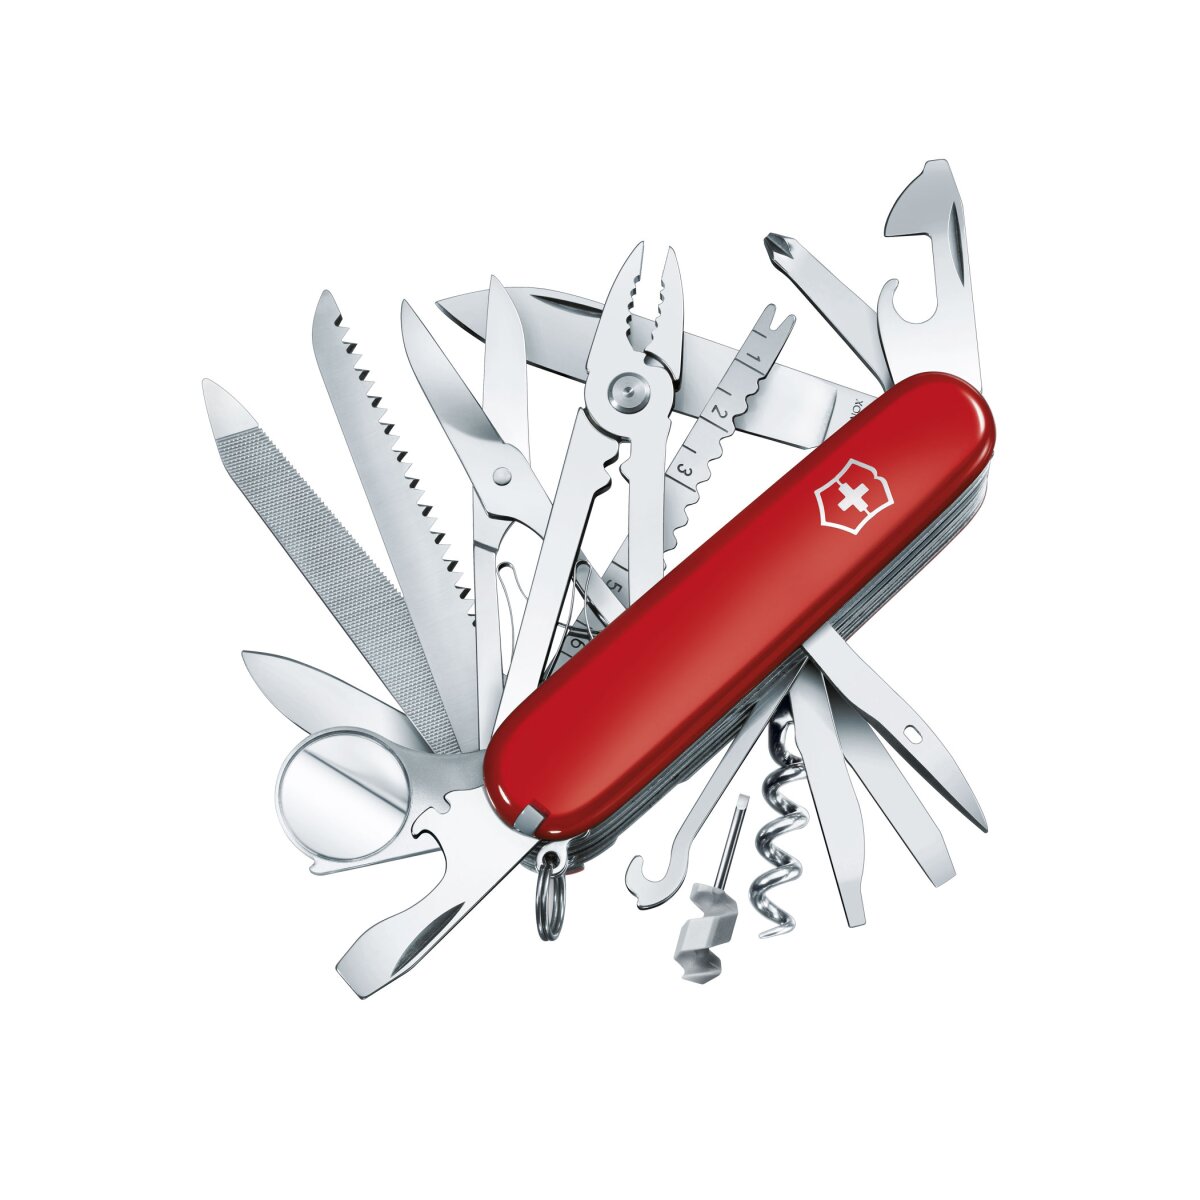 Officers knife, SwissChamp, red